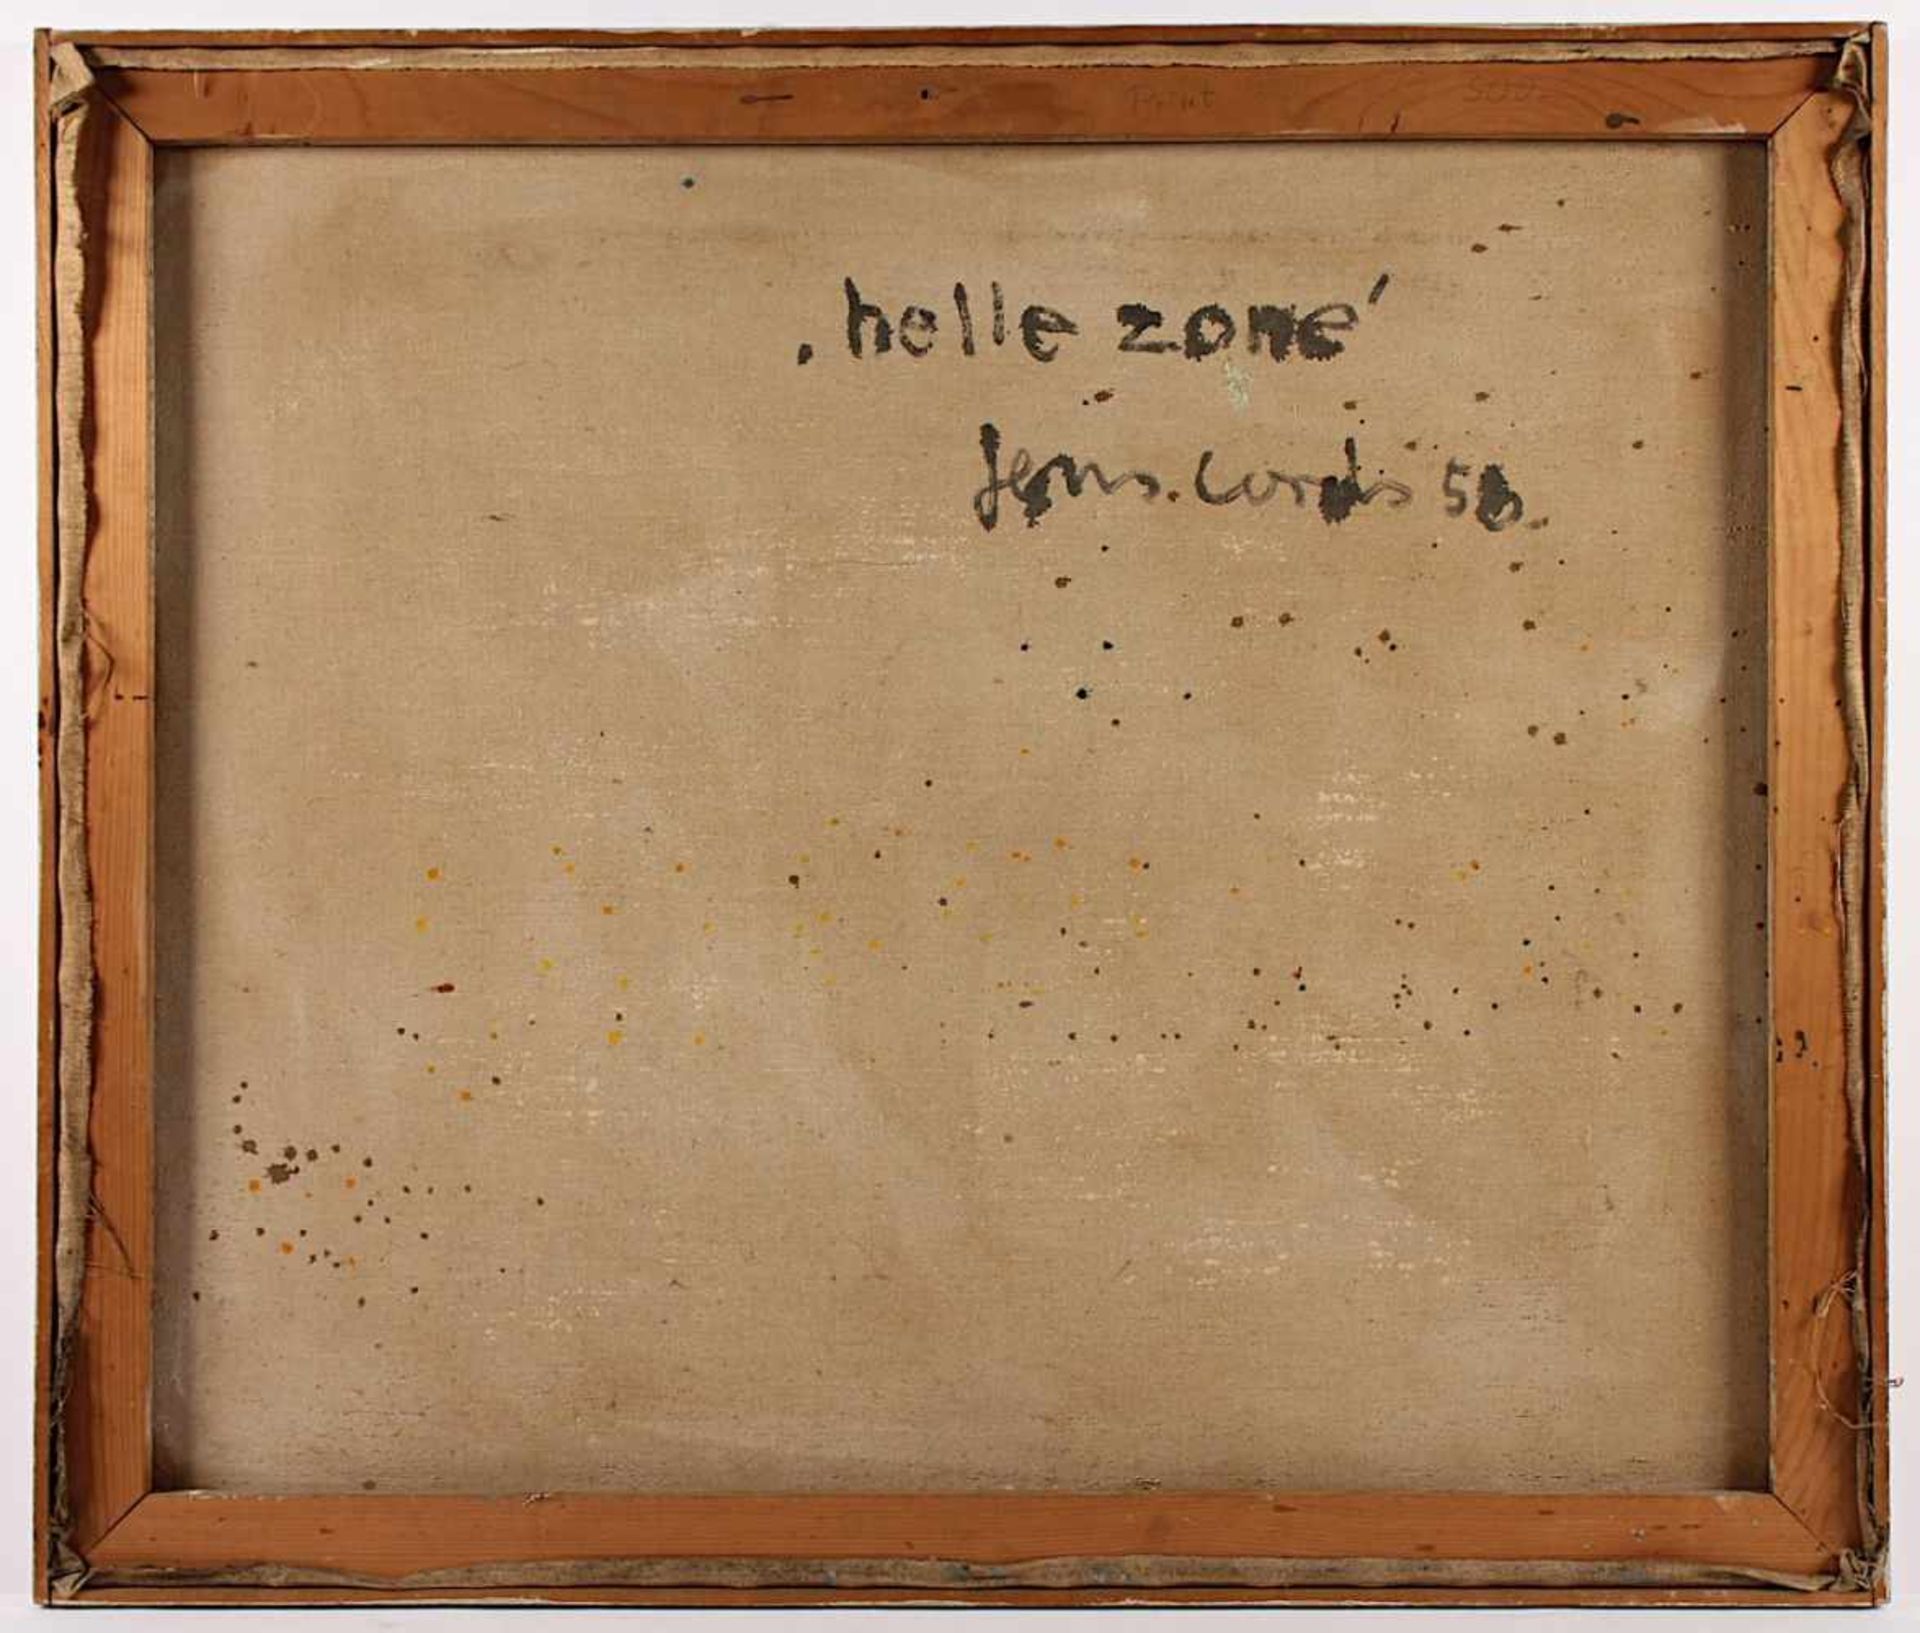 CORDS, Jens, "Helle Zone", Öl/Lwd., 81 x 95, unten rechts signiert und datiert '58, verso signiert - Image 2 of 2